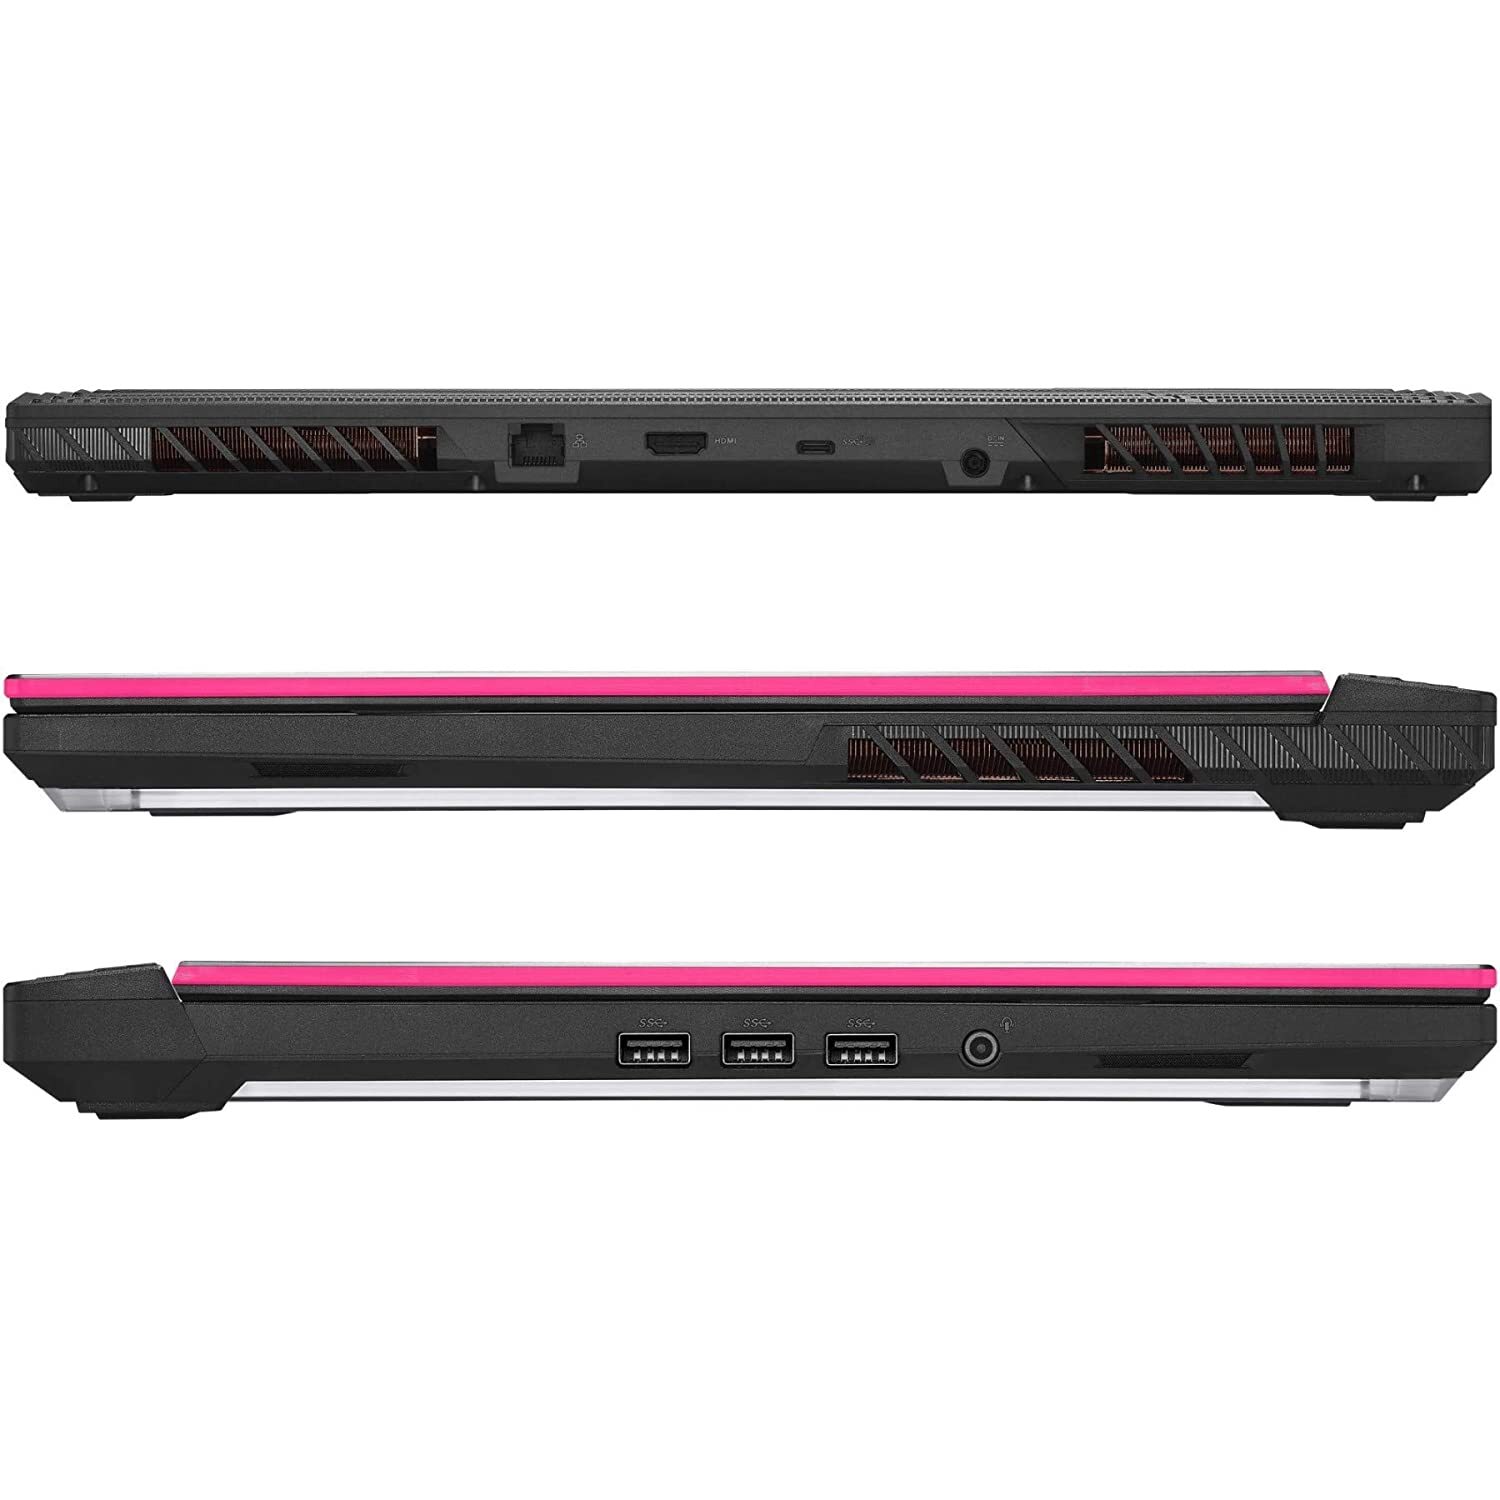 Asus Gaming Laptop ROG Strix G15 i7-10750H(8 Gb Ram,1T SSD,15.6 FHD-144hz,GTX1650Ti-4GB,RGB Backlit,WIFI6,WIN10,,Electro Punk),G512LI-HN179T